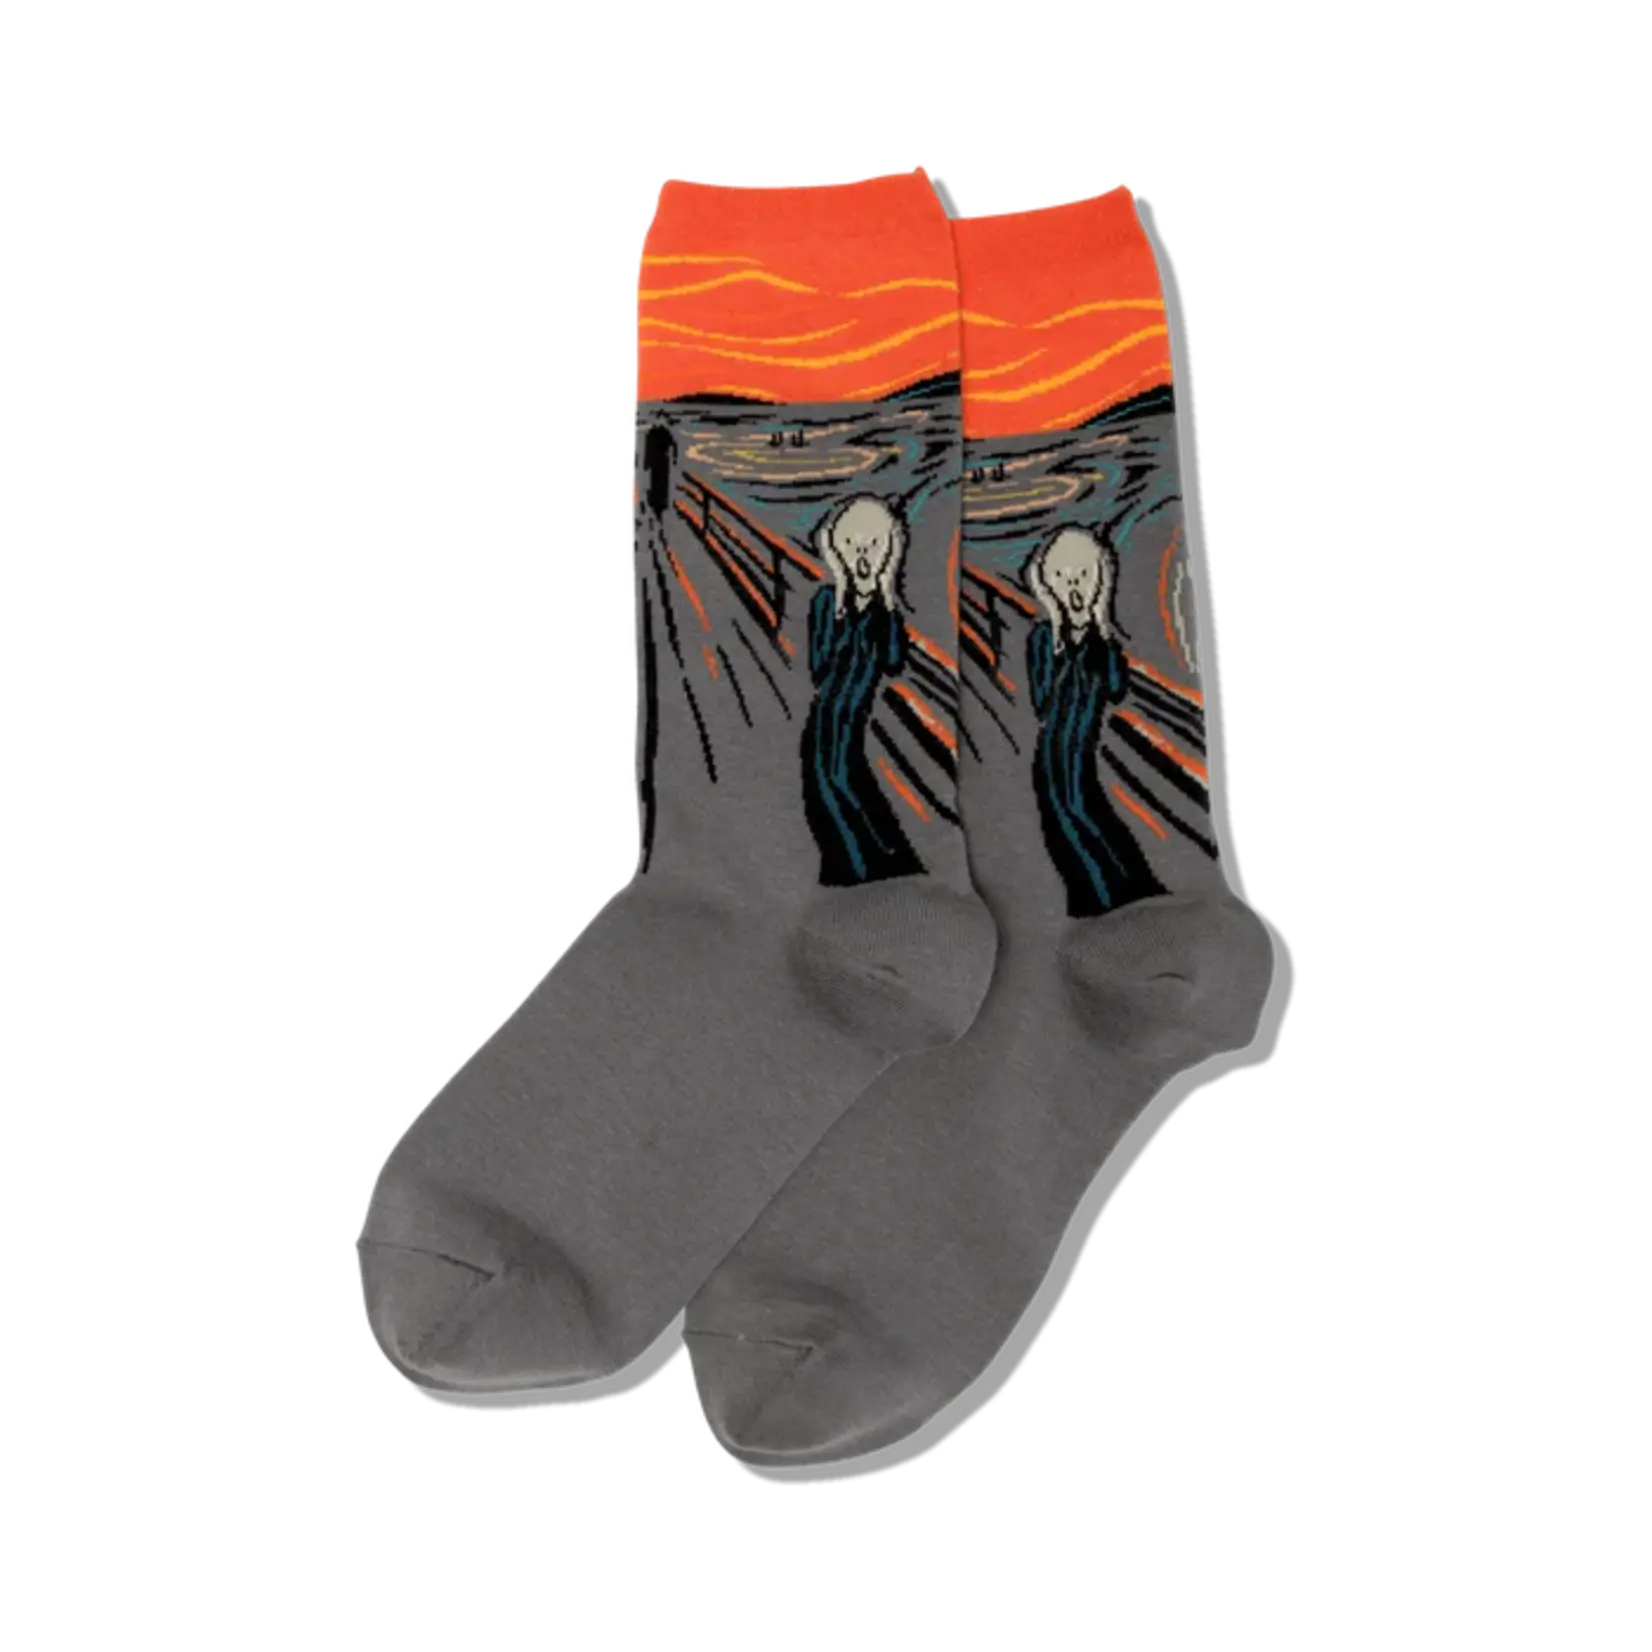 The Scream Socks